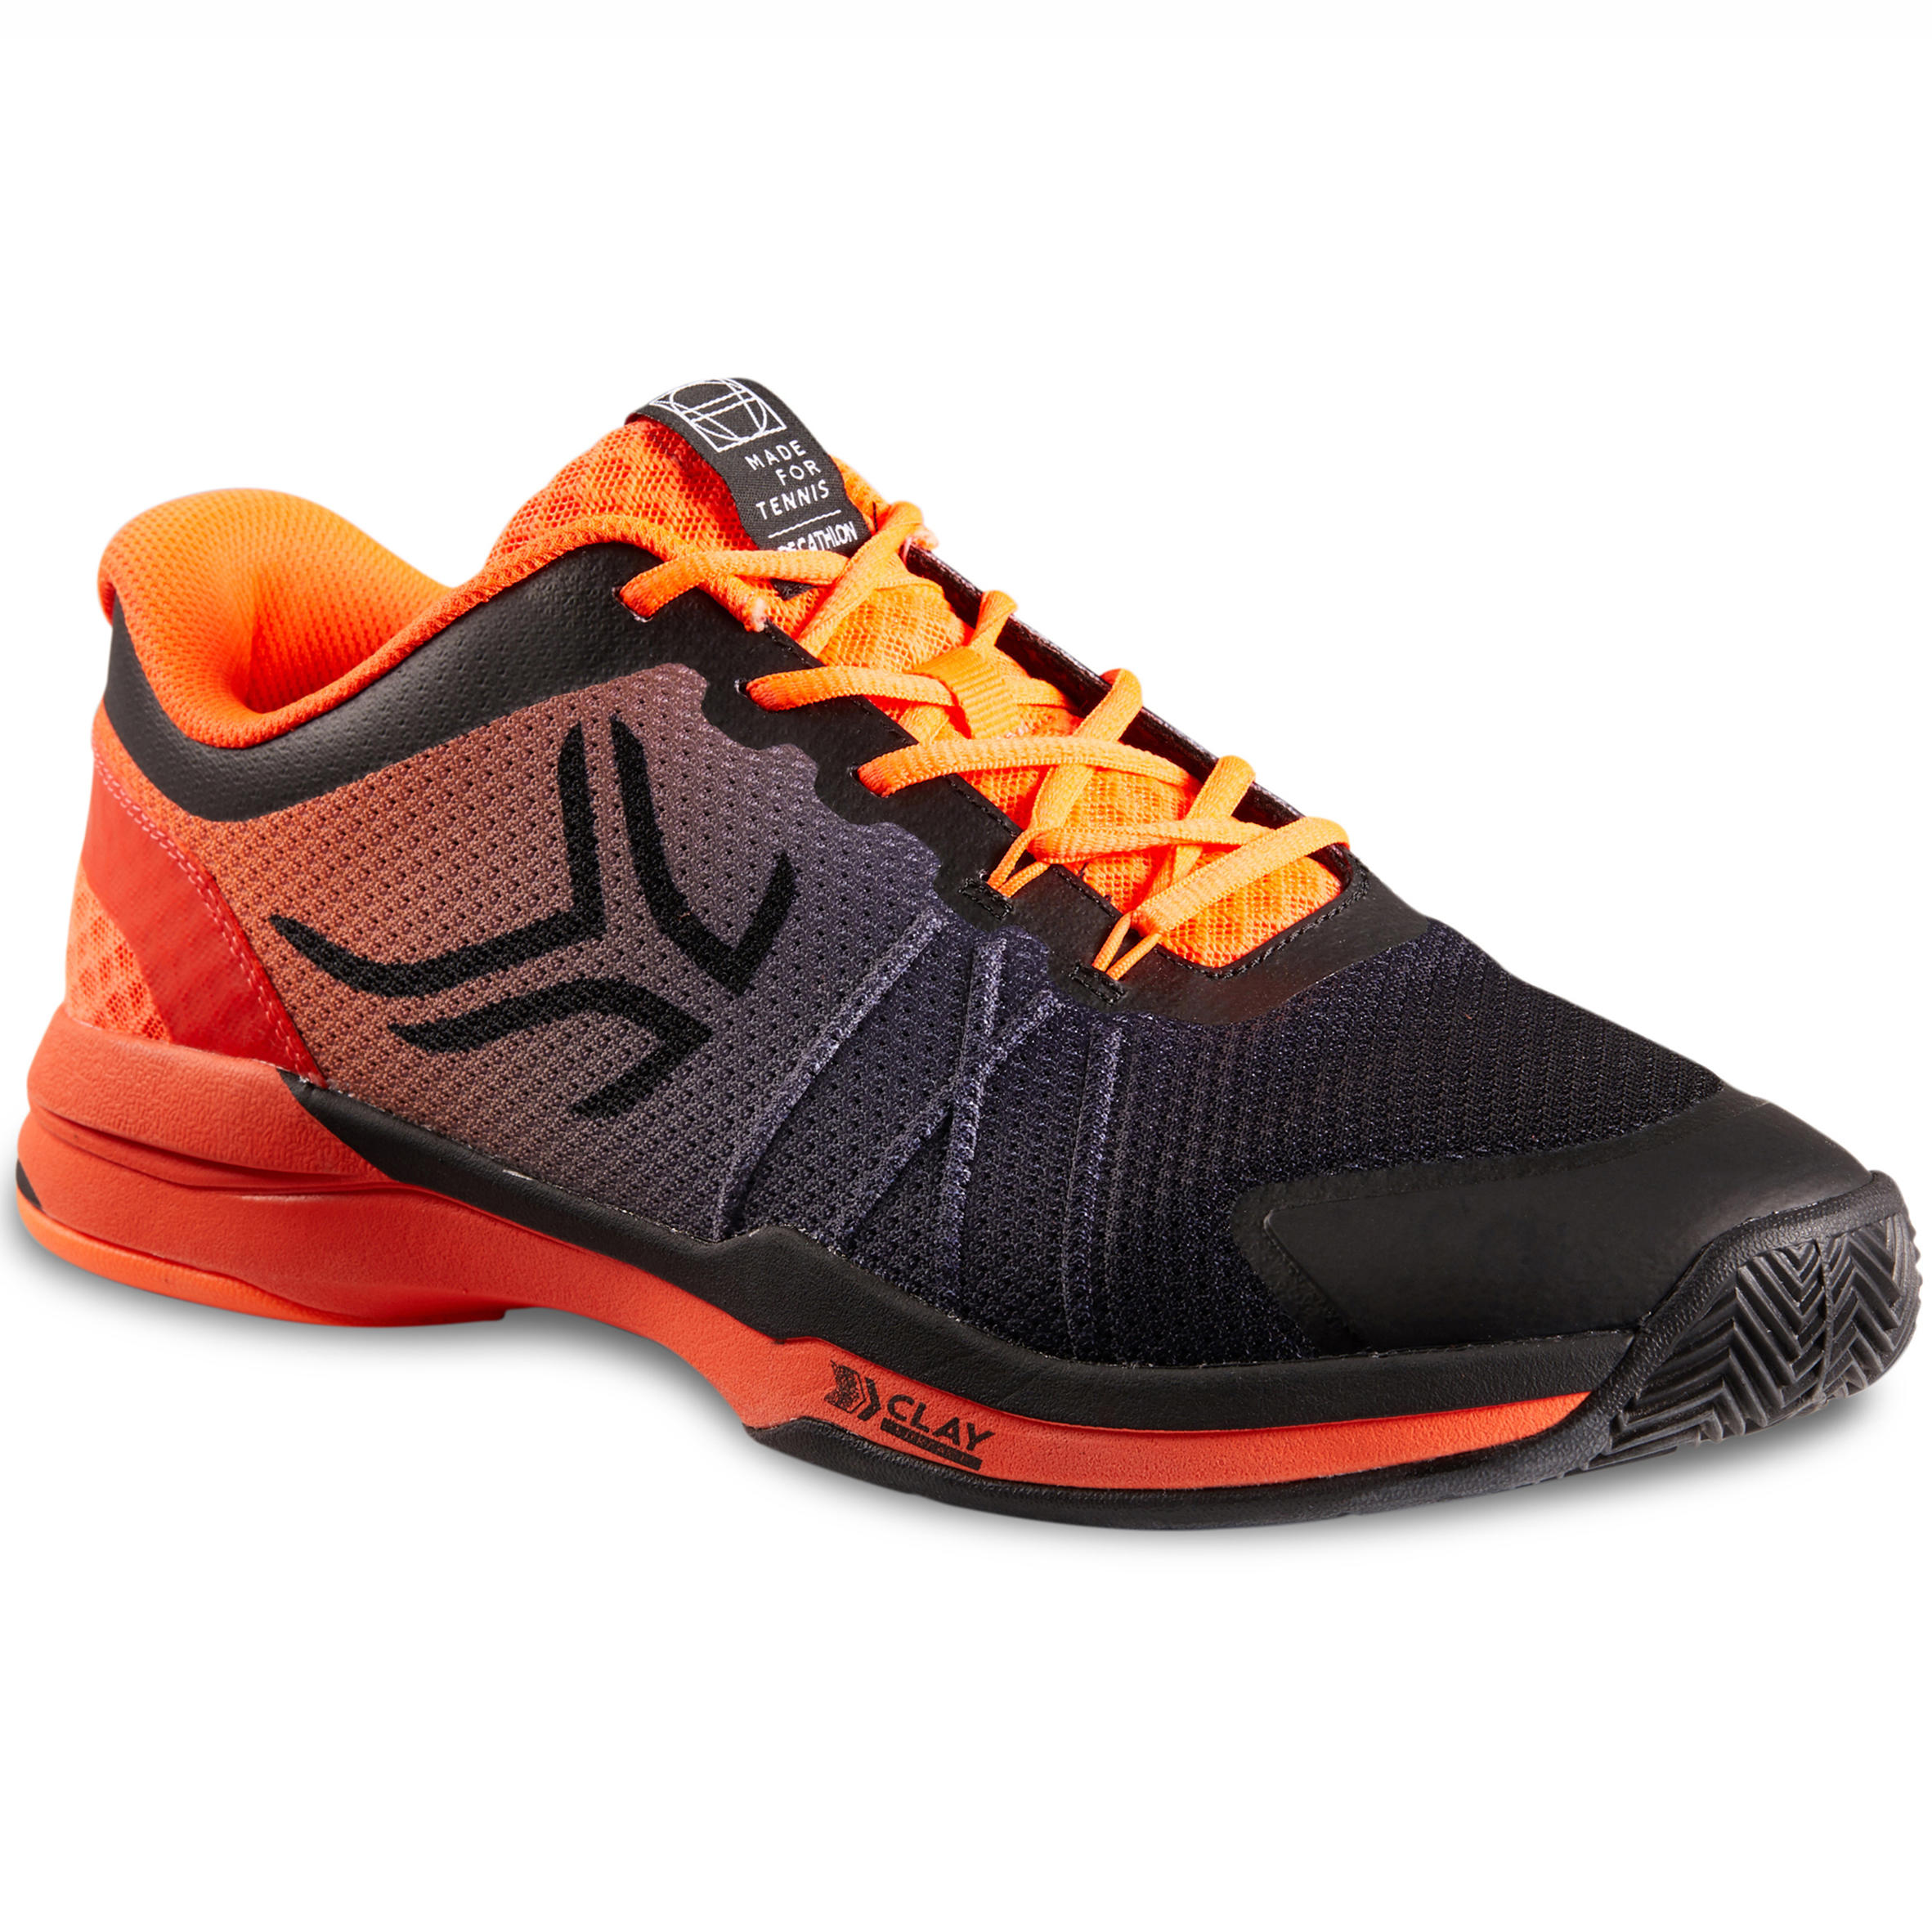 Men's Clay Court Tennis Shoes TS590 